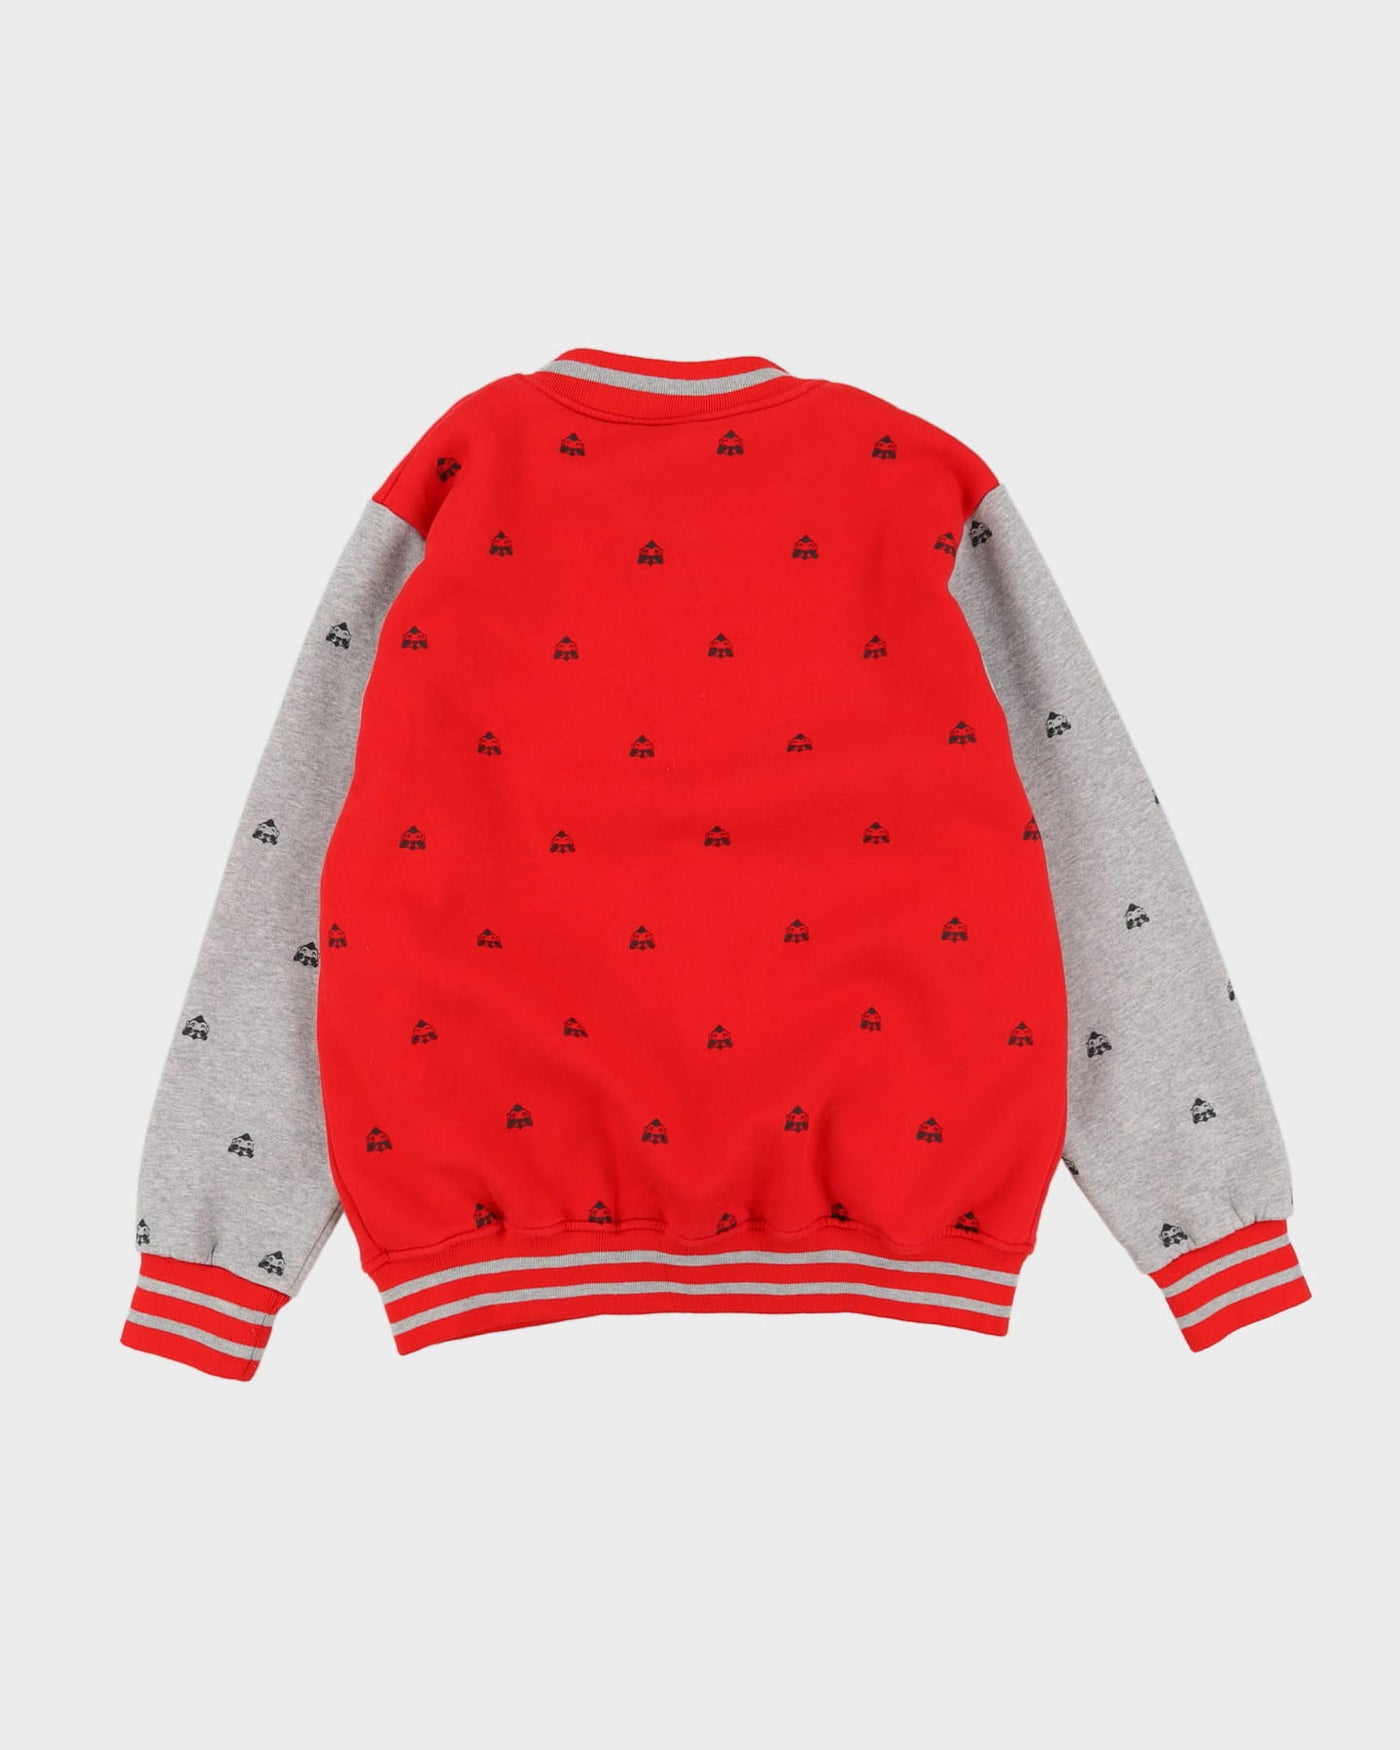 00s Evisu Red All Over Print Button Up Letterman Sweatshirt - XL